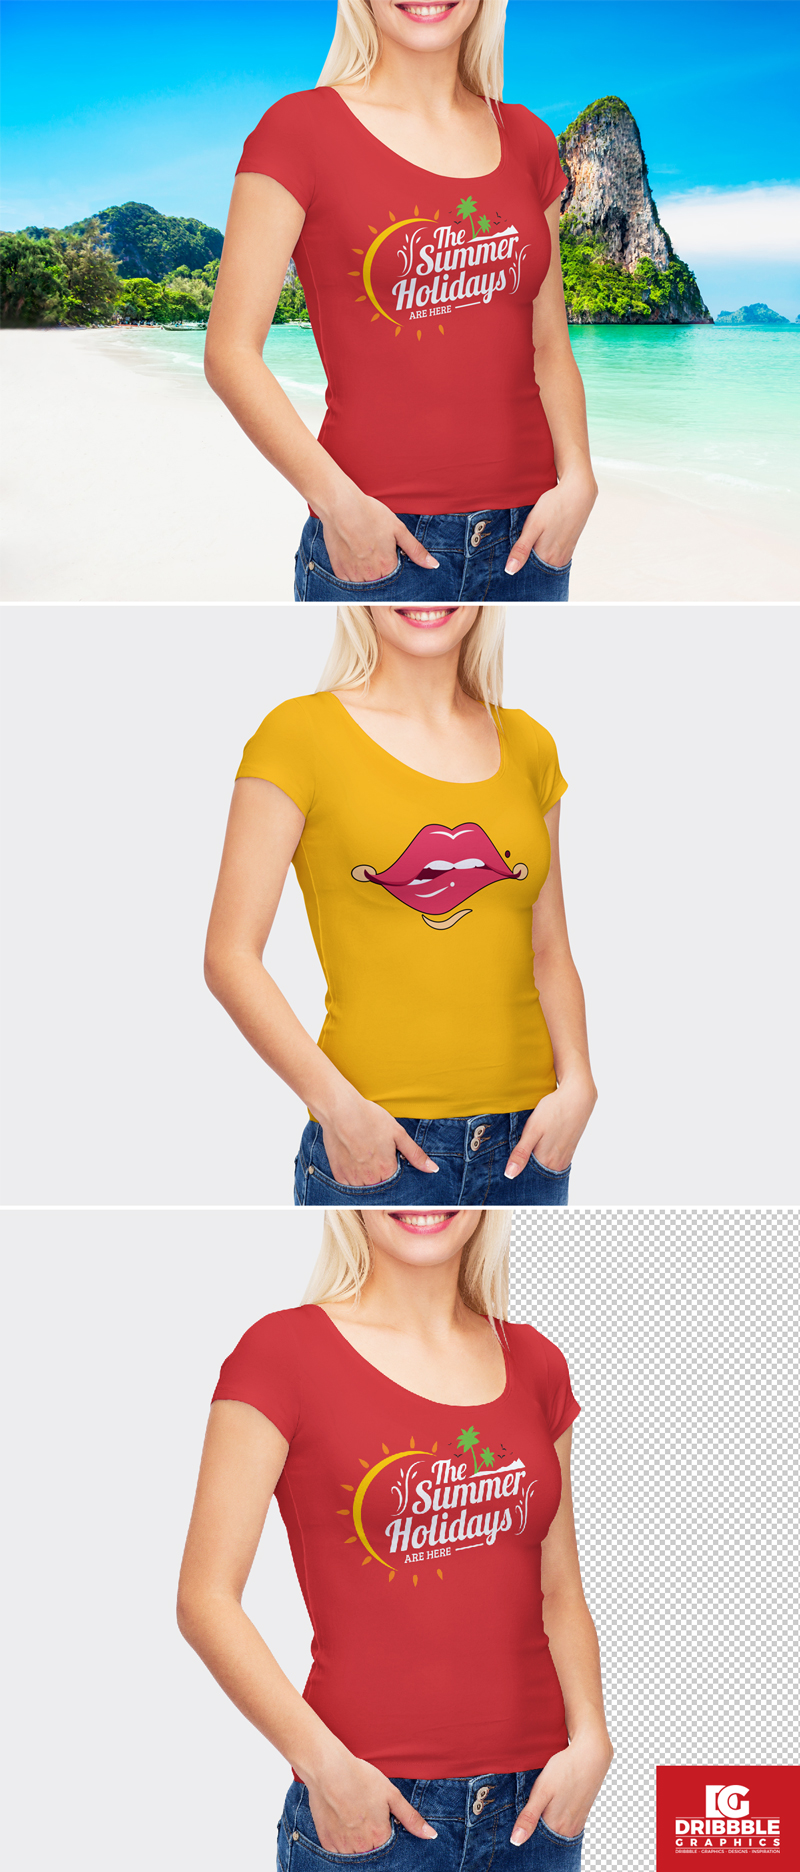 Free-Smart-Girl-Wearing-T-Shirt-Mockup